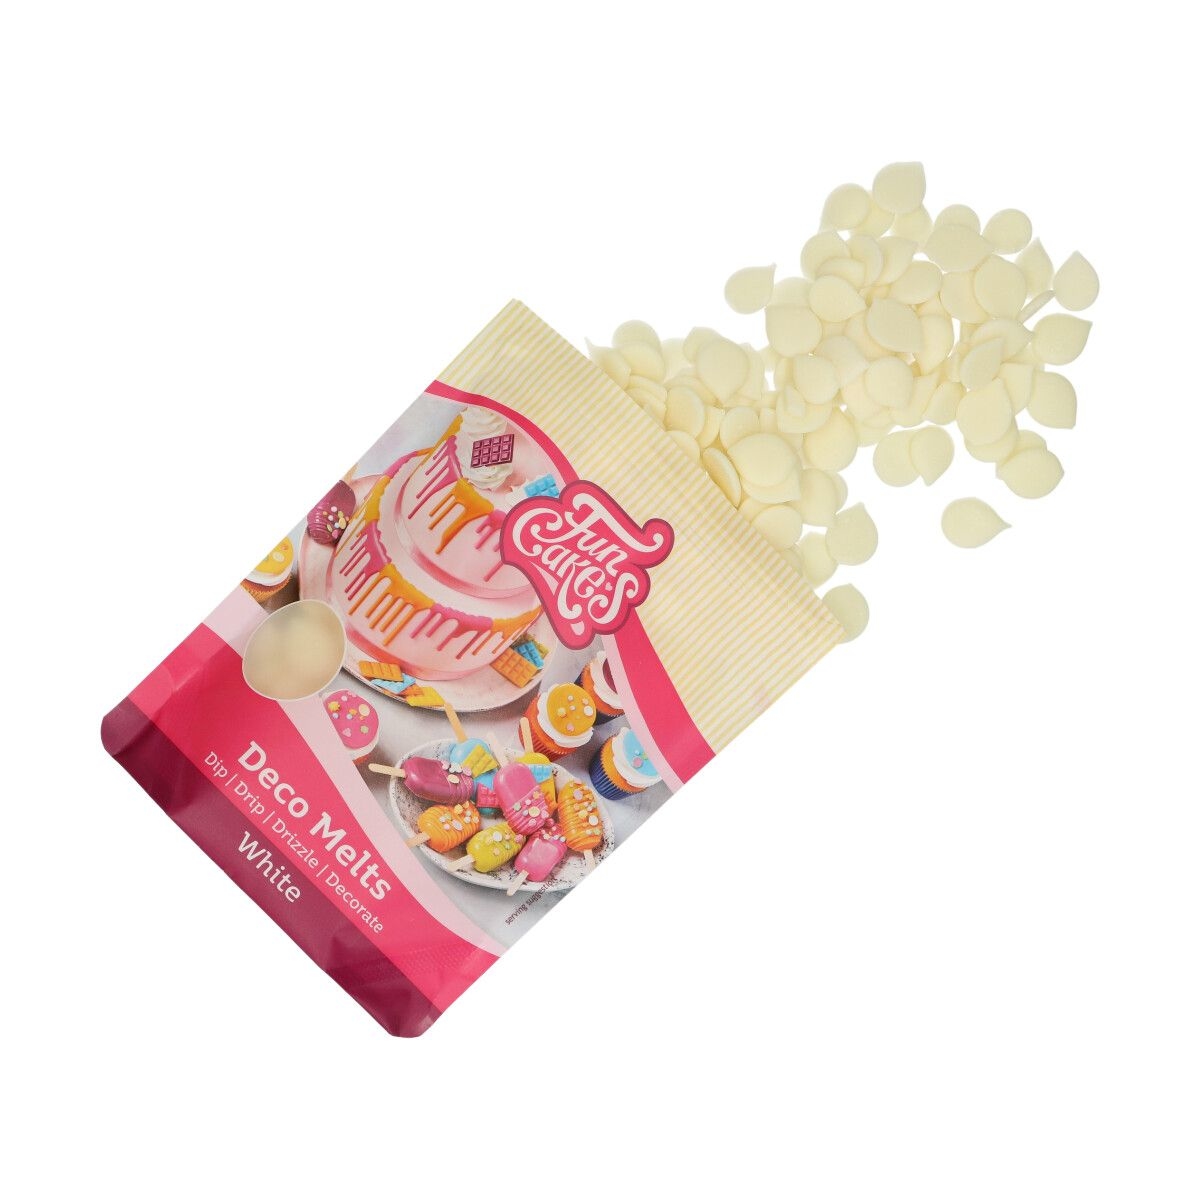 Candy melts blanc - 250gr